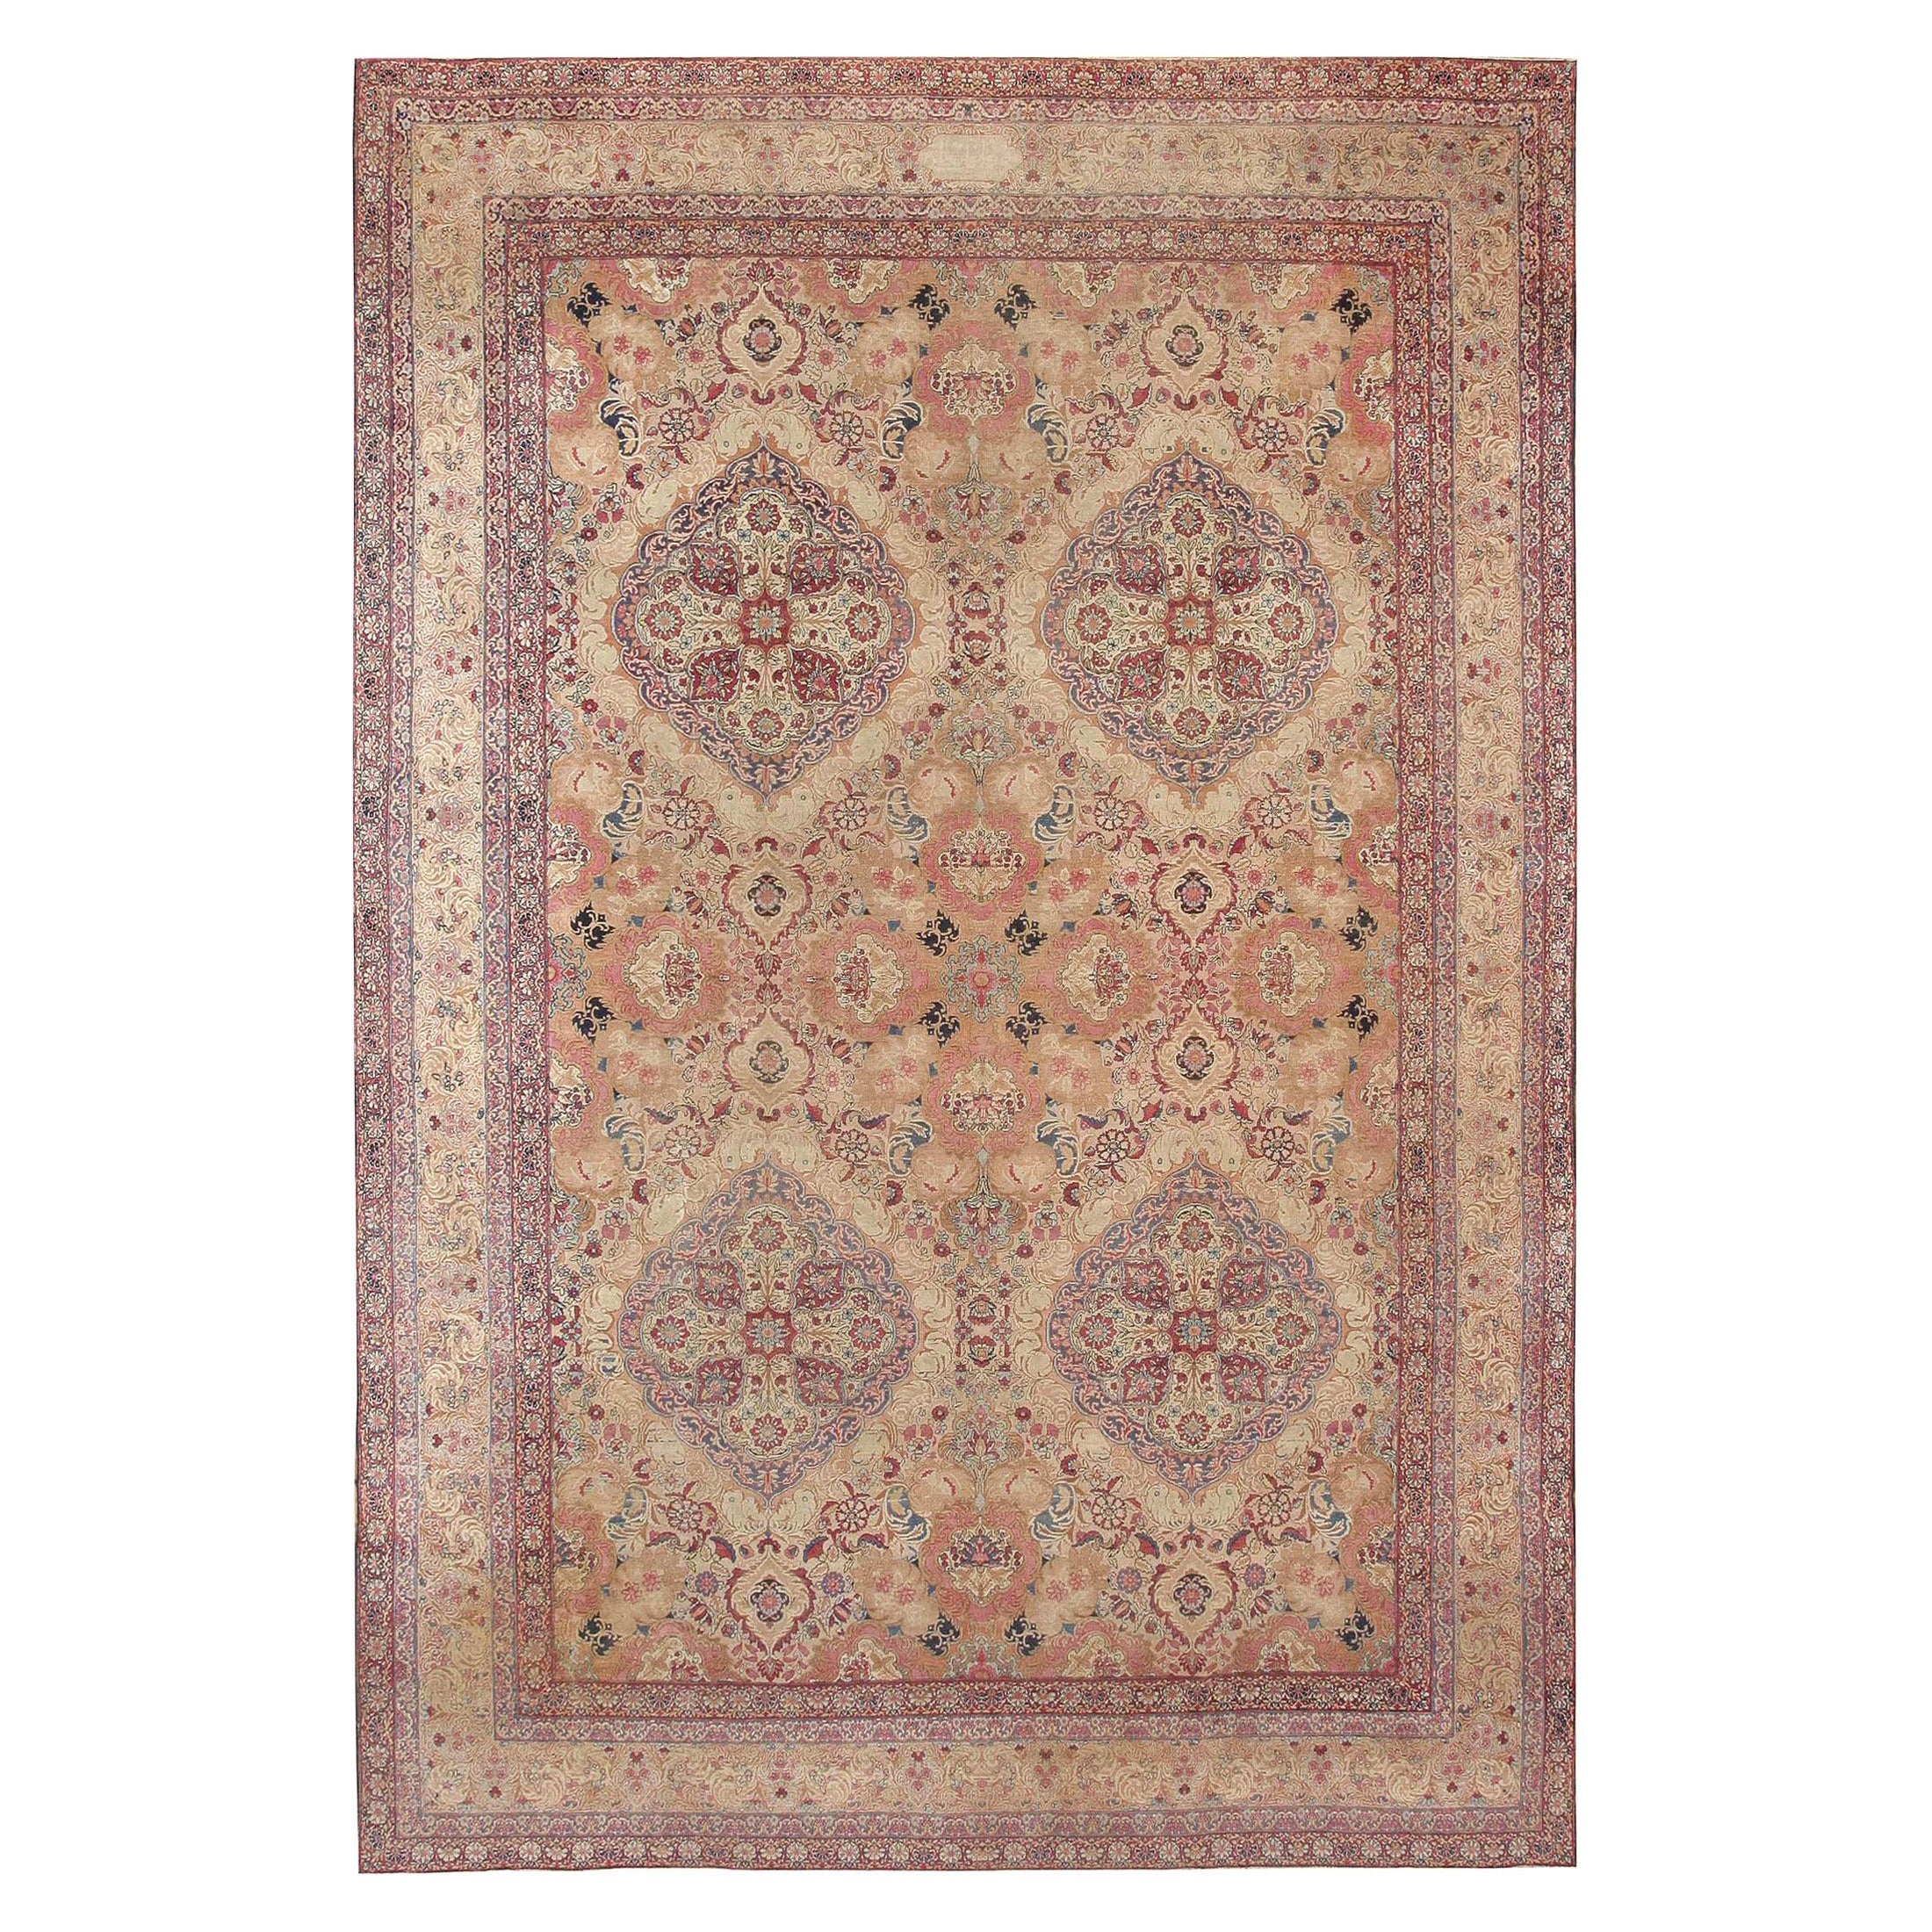 Antiker persischer Kerman-Lavar-Teppich. 10 Fuß x 14 Fuß 5 Zoll